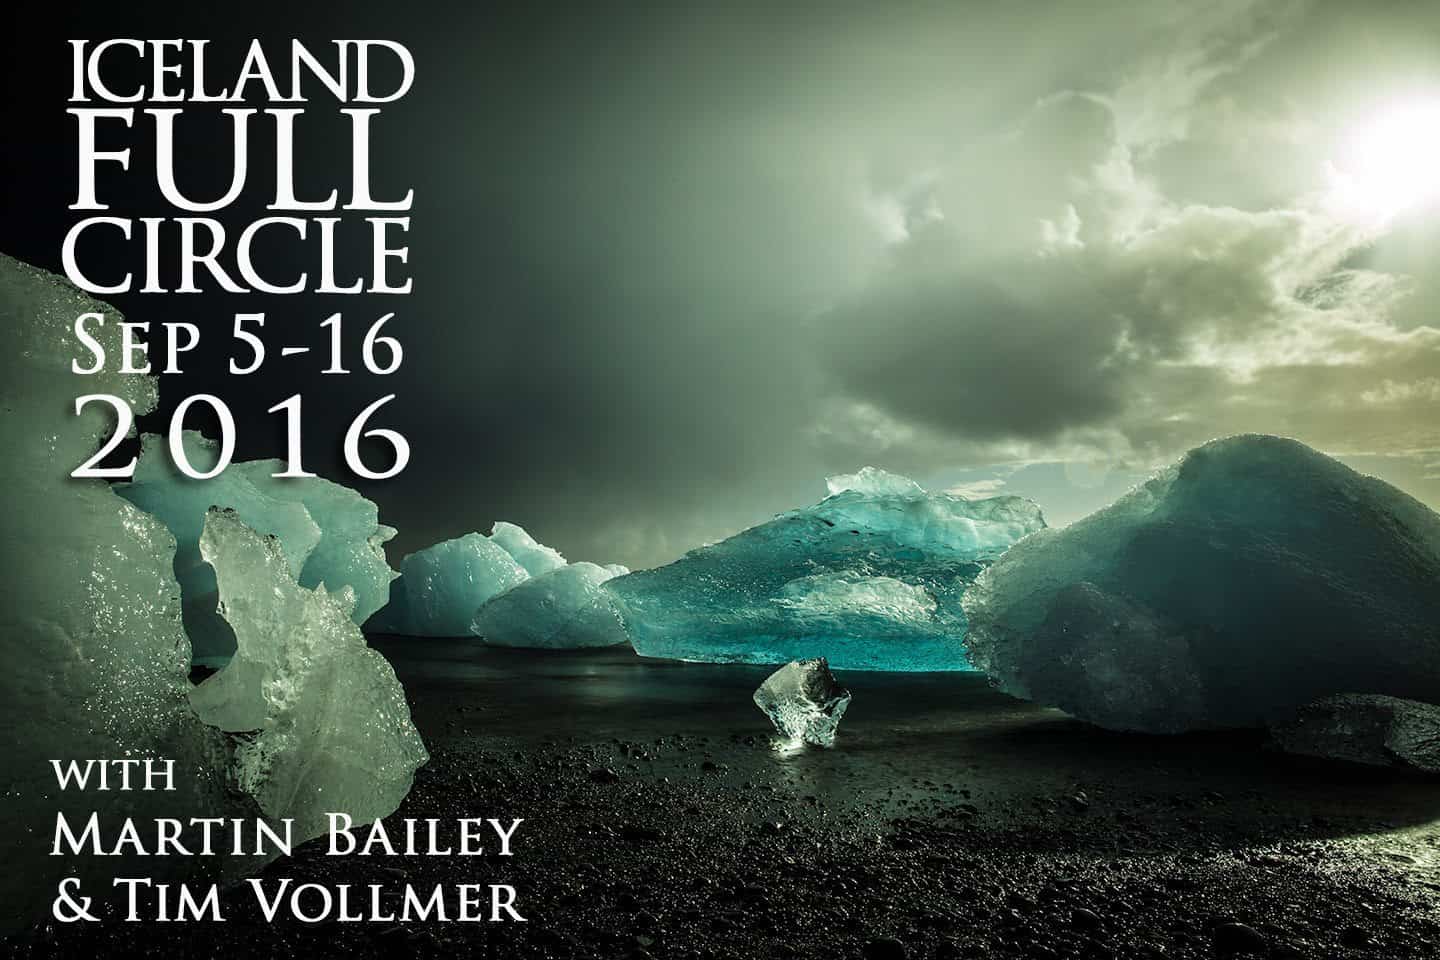 Iceland Full Circle Tour & Workshop 2016 Balance Payment